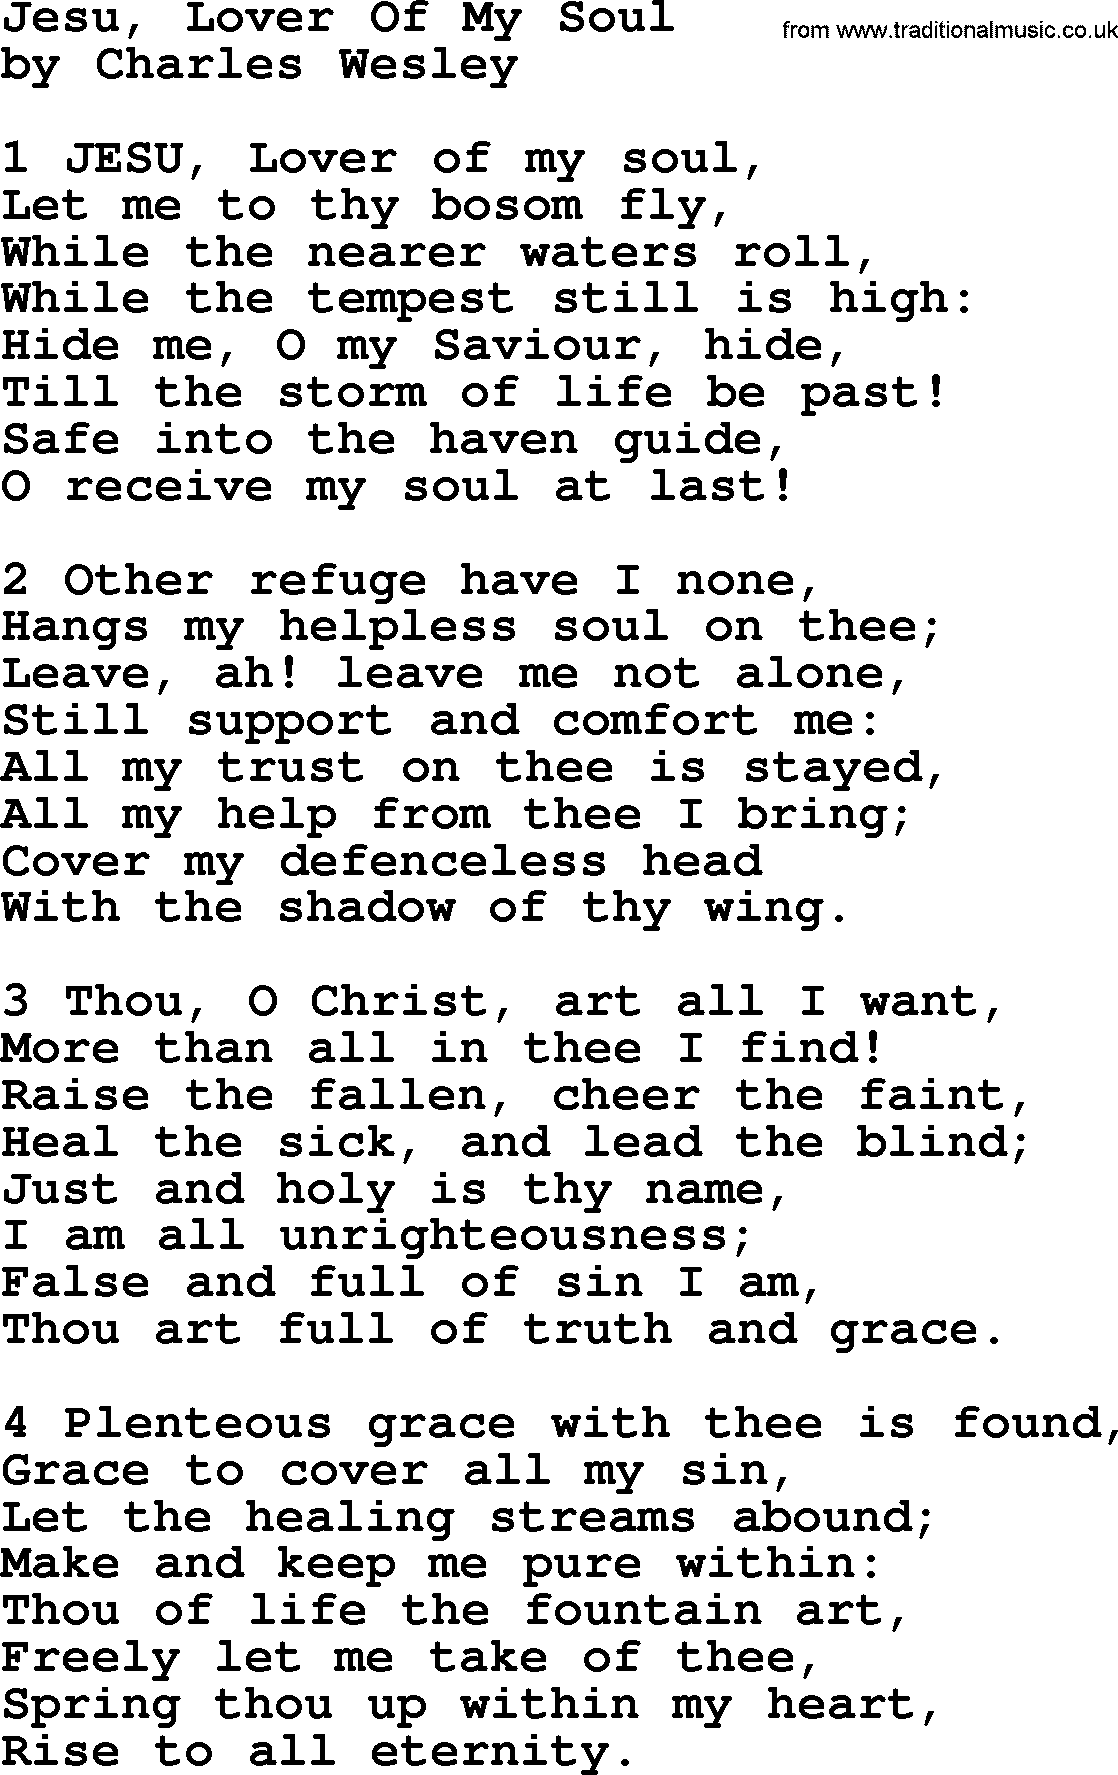 Charles Wesley hymn: Jesu, Lover Of My Soul, lyrics